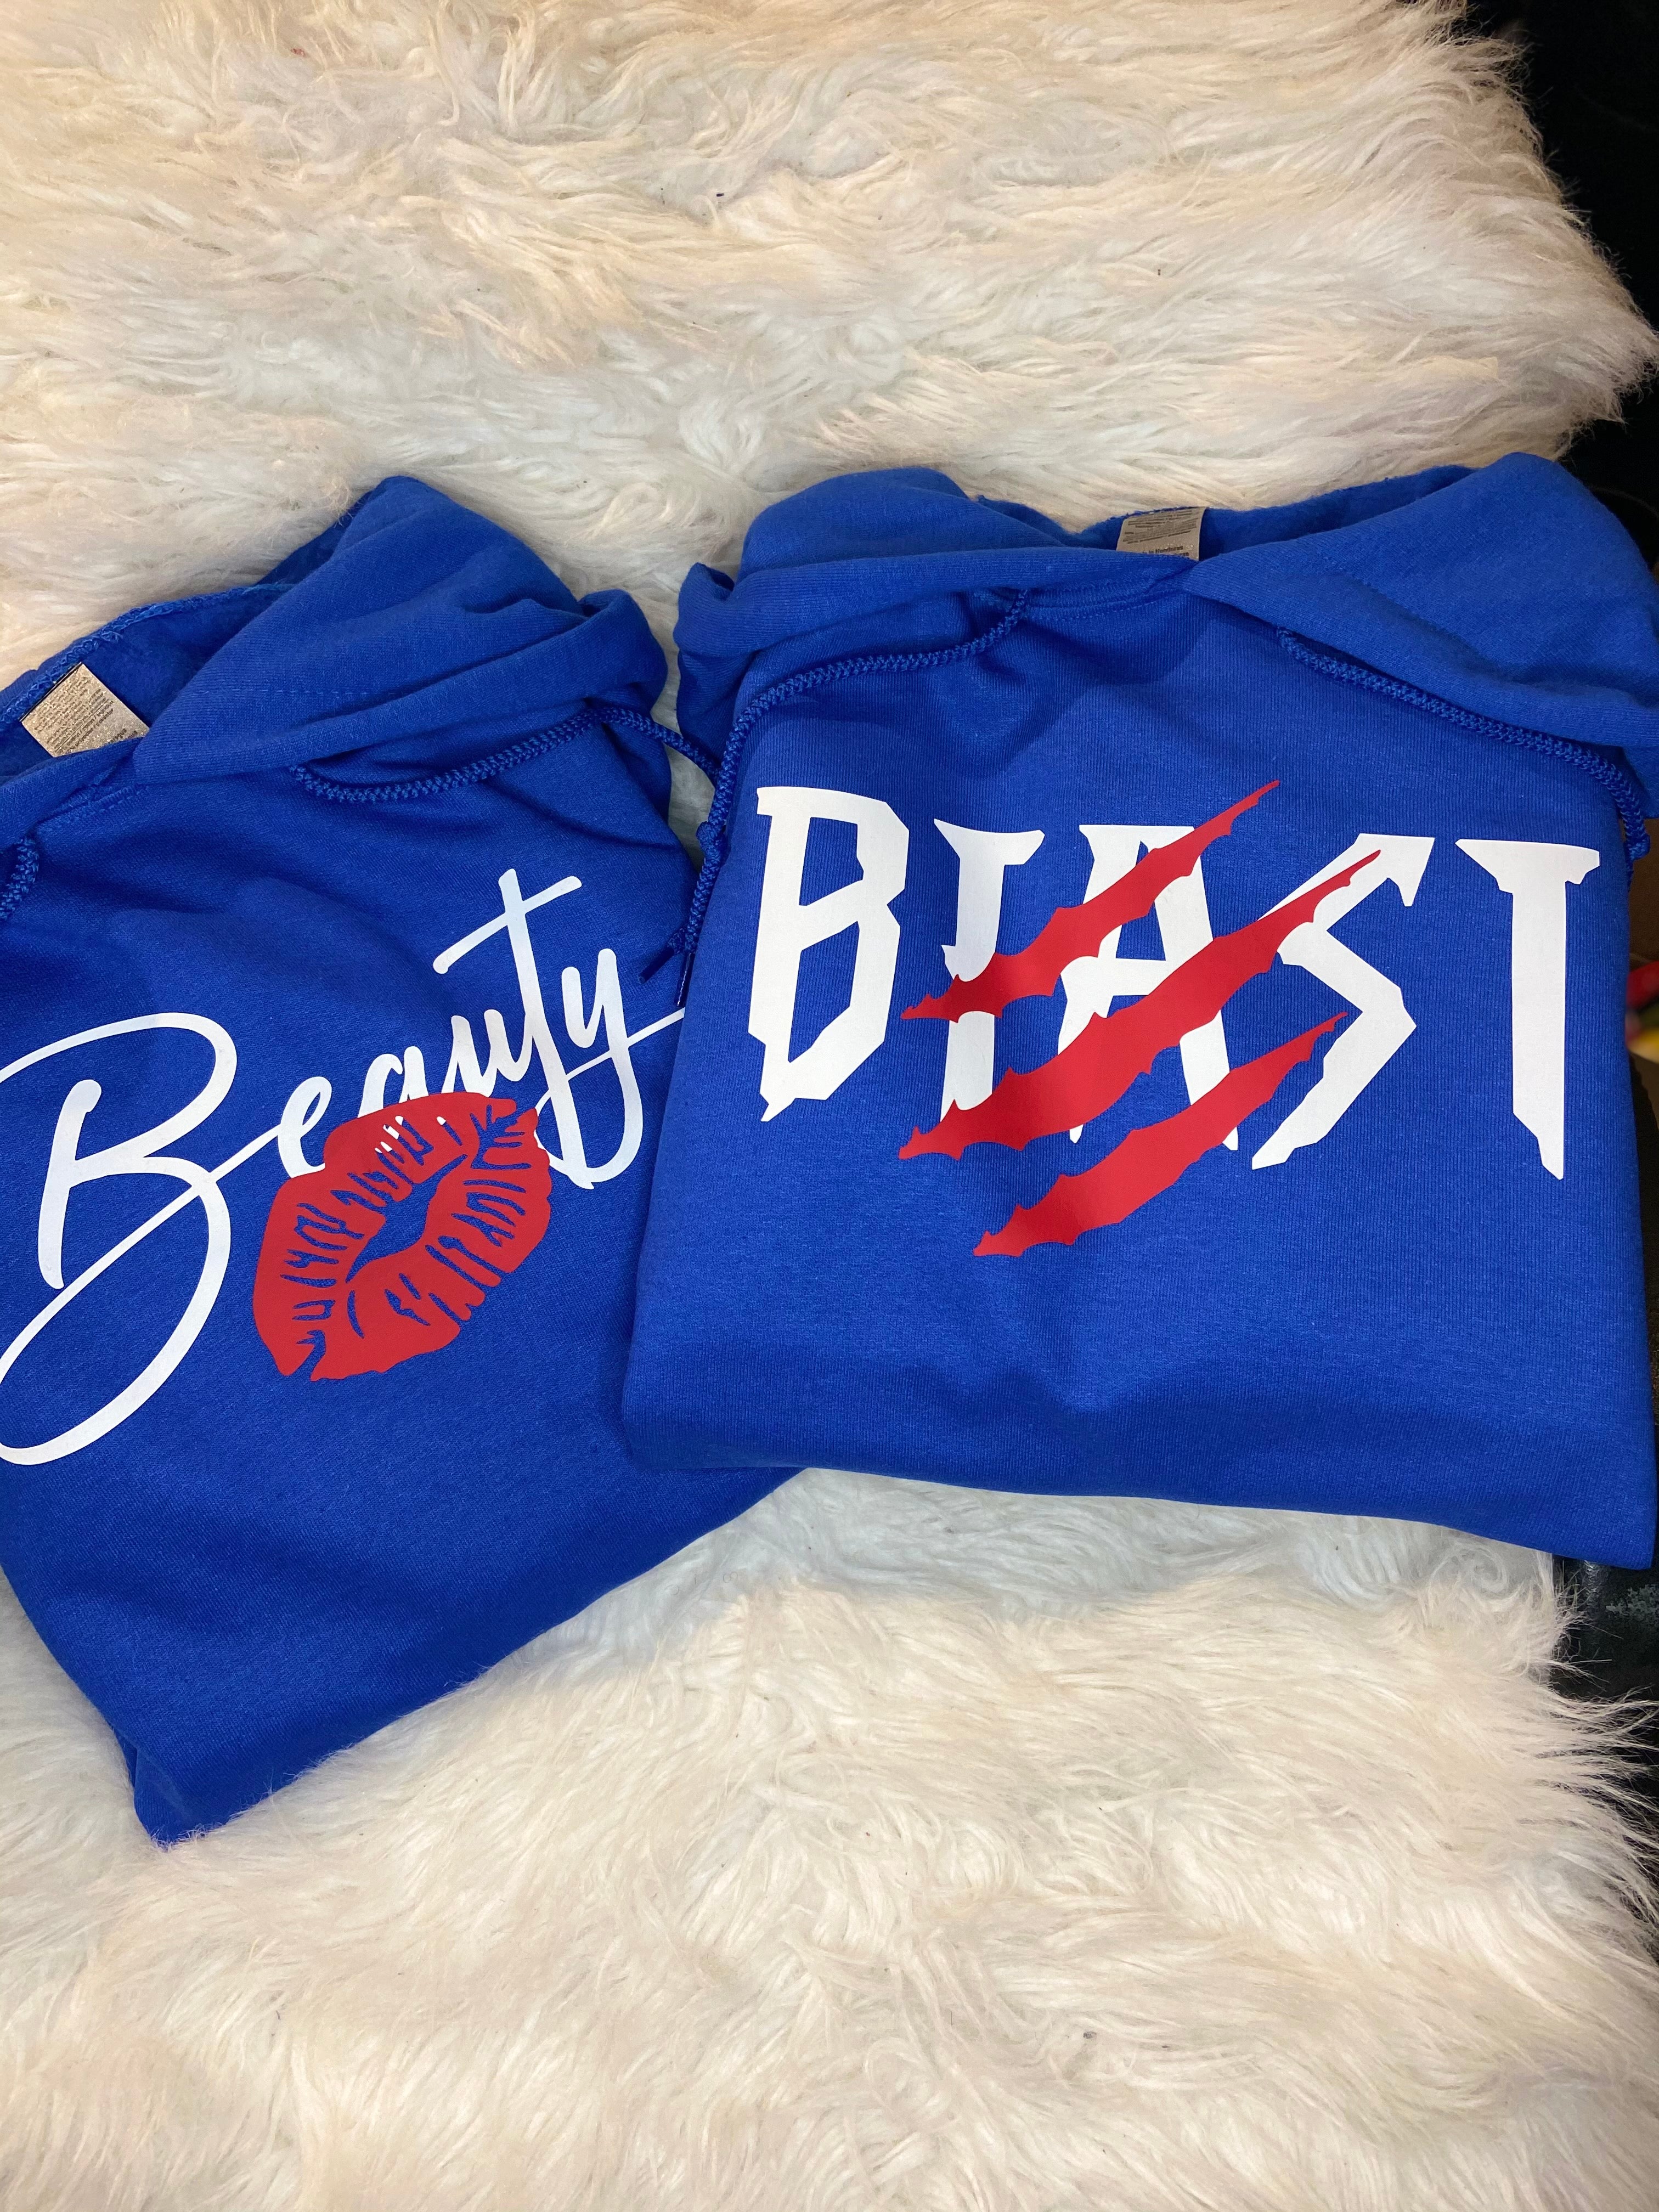 Beauty/Beast Couples Hoodies Set